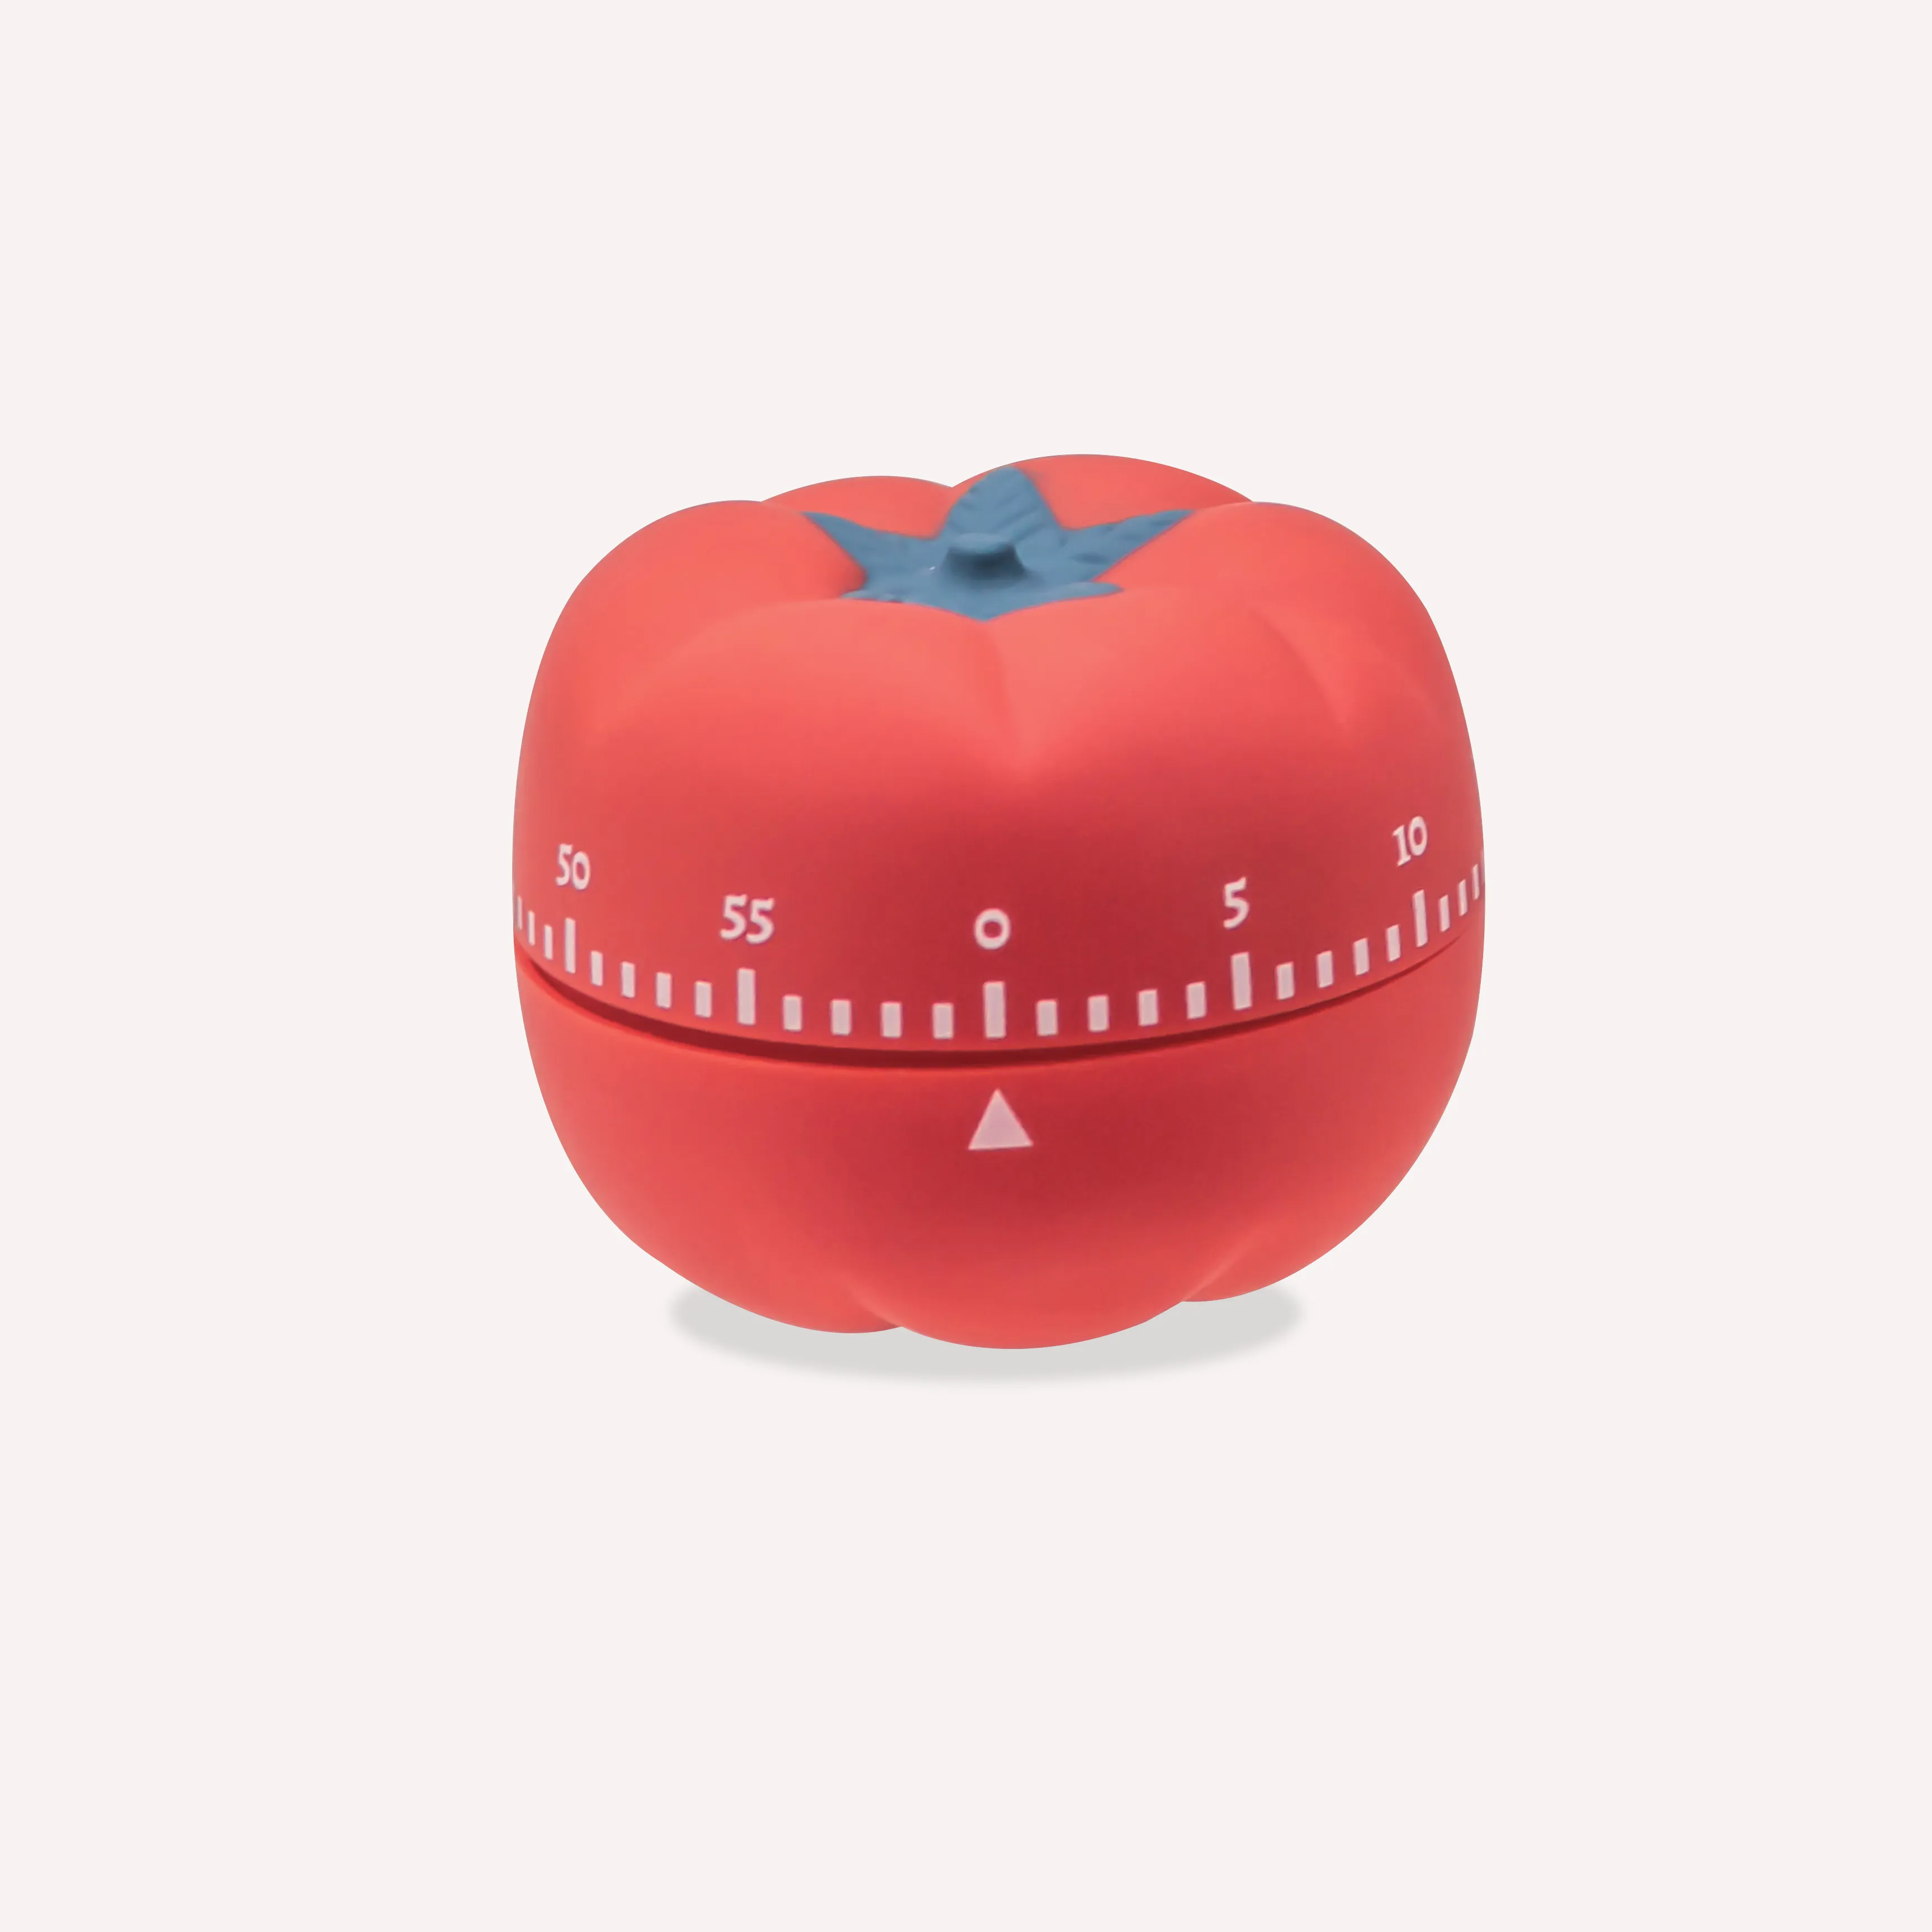 Vegetable wind up timer tomato shaped mechanical kitchen timer/ study timer / cooking timer